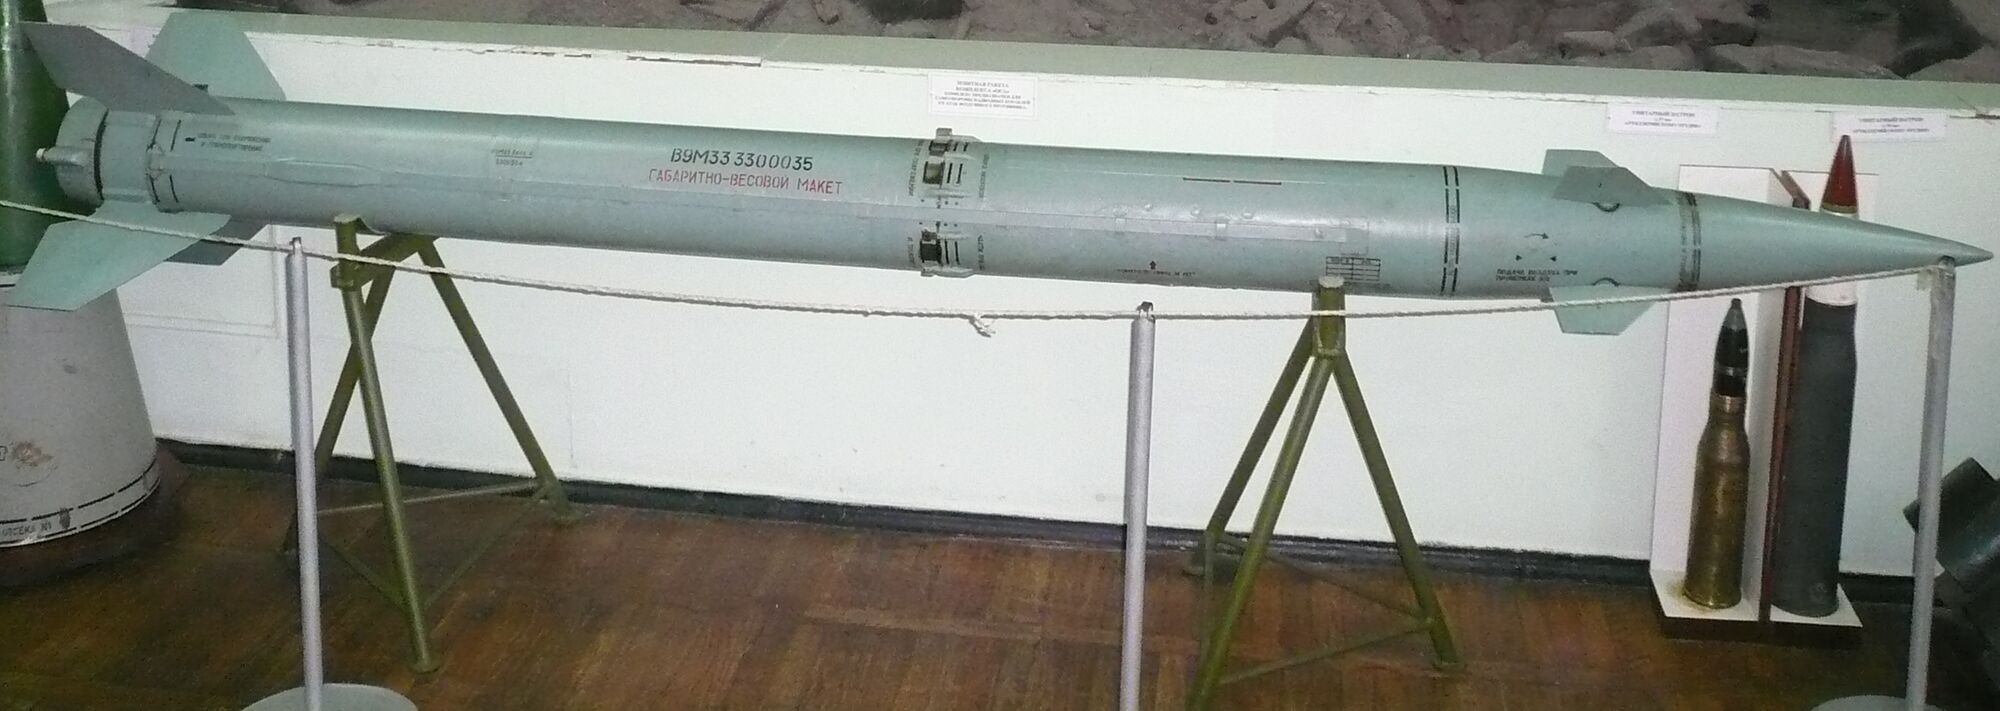 Ракета 9М33 к ЗРК "Оса"